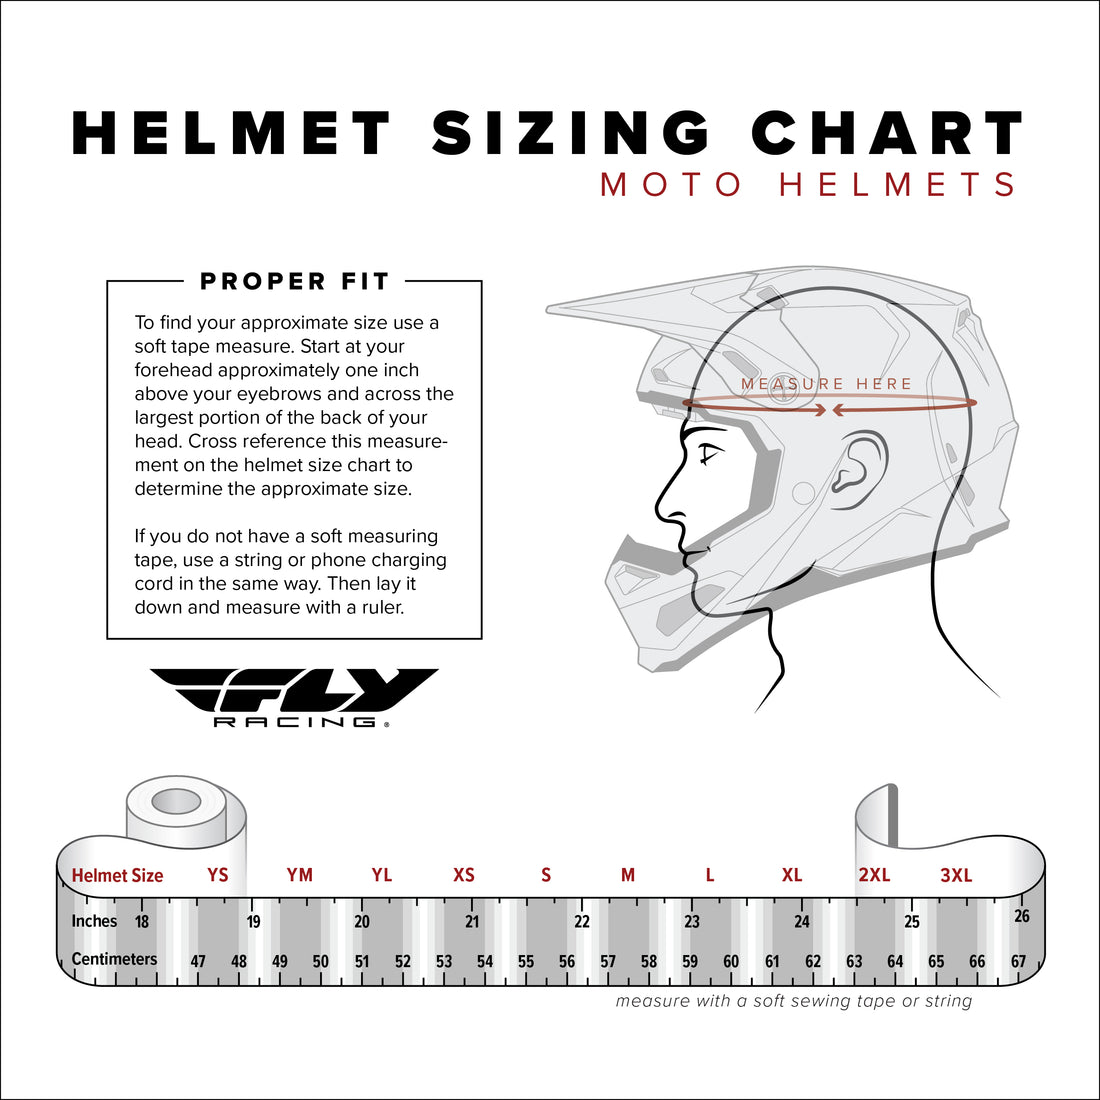 Fly Racing Formula CP Solid Helmet 2022